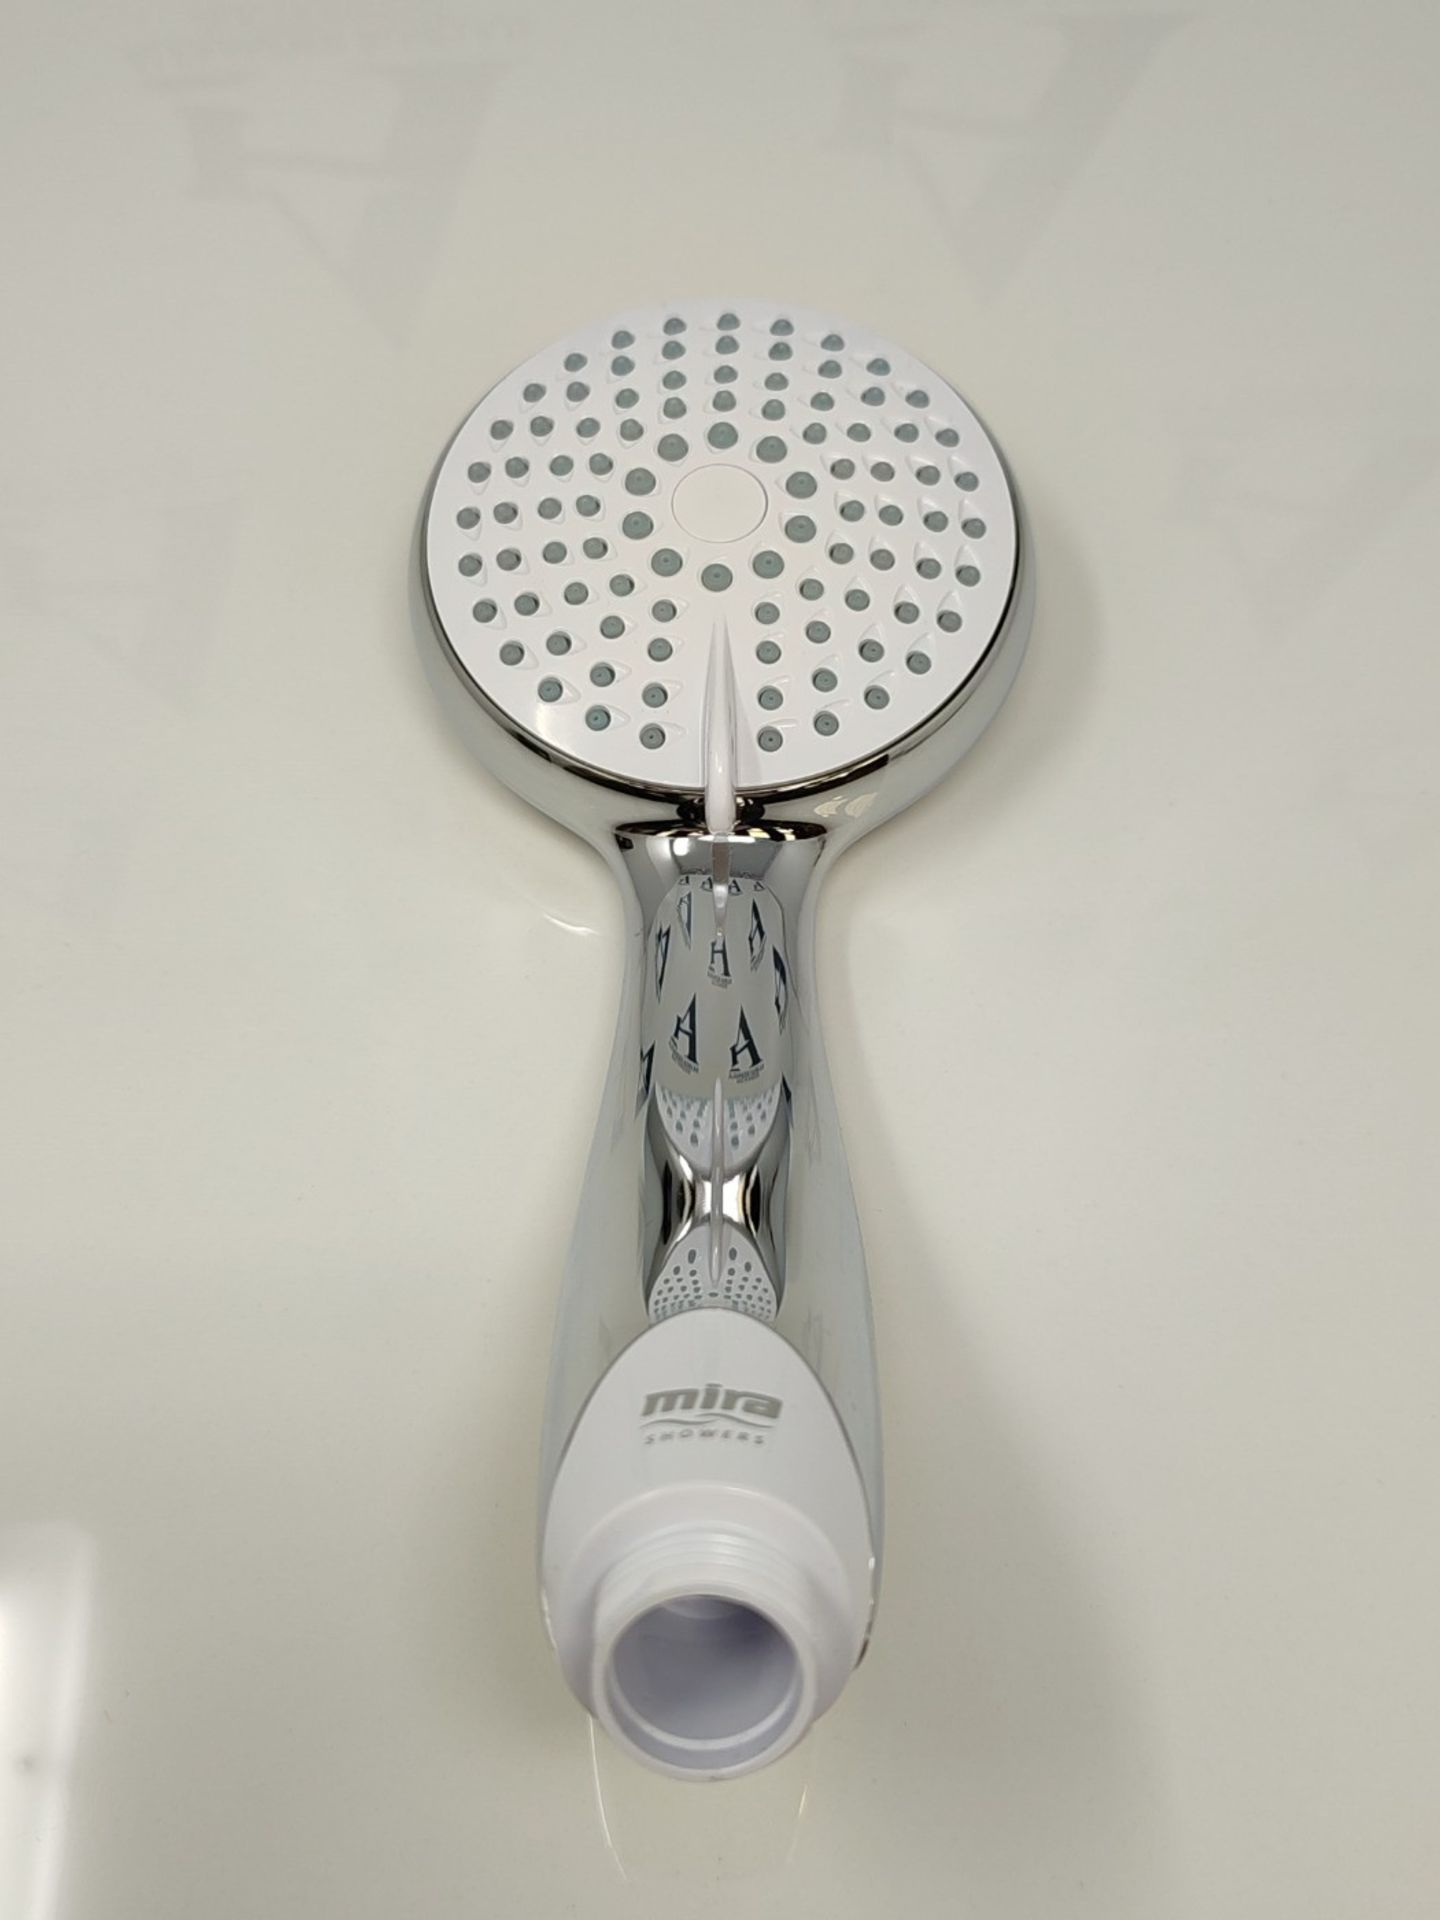 Mira Showers Nectar Shower Head 4 Spray Shower Head 90 mm Chrome 2.1703.004 - Image 2 of 3